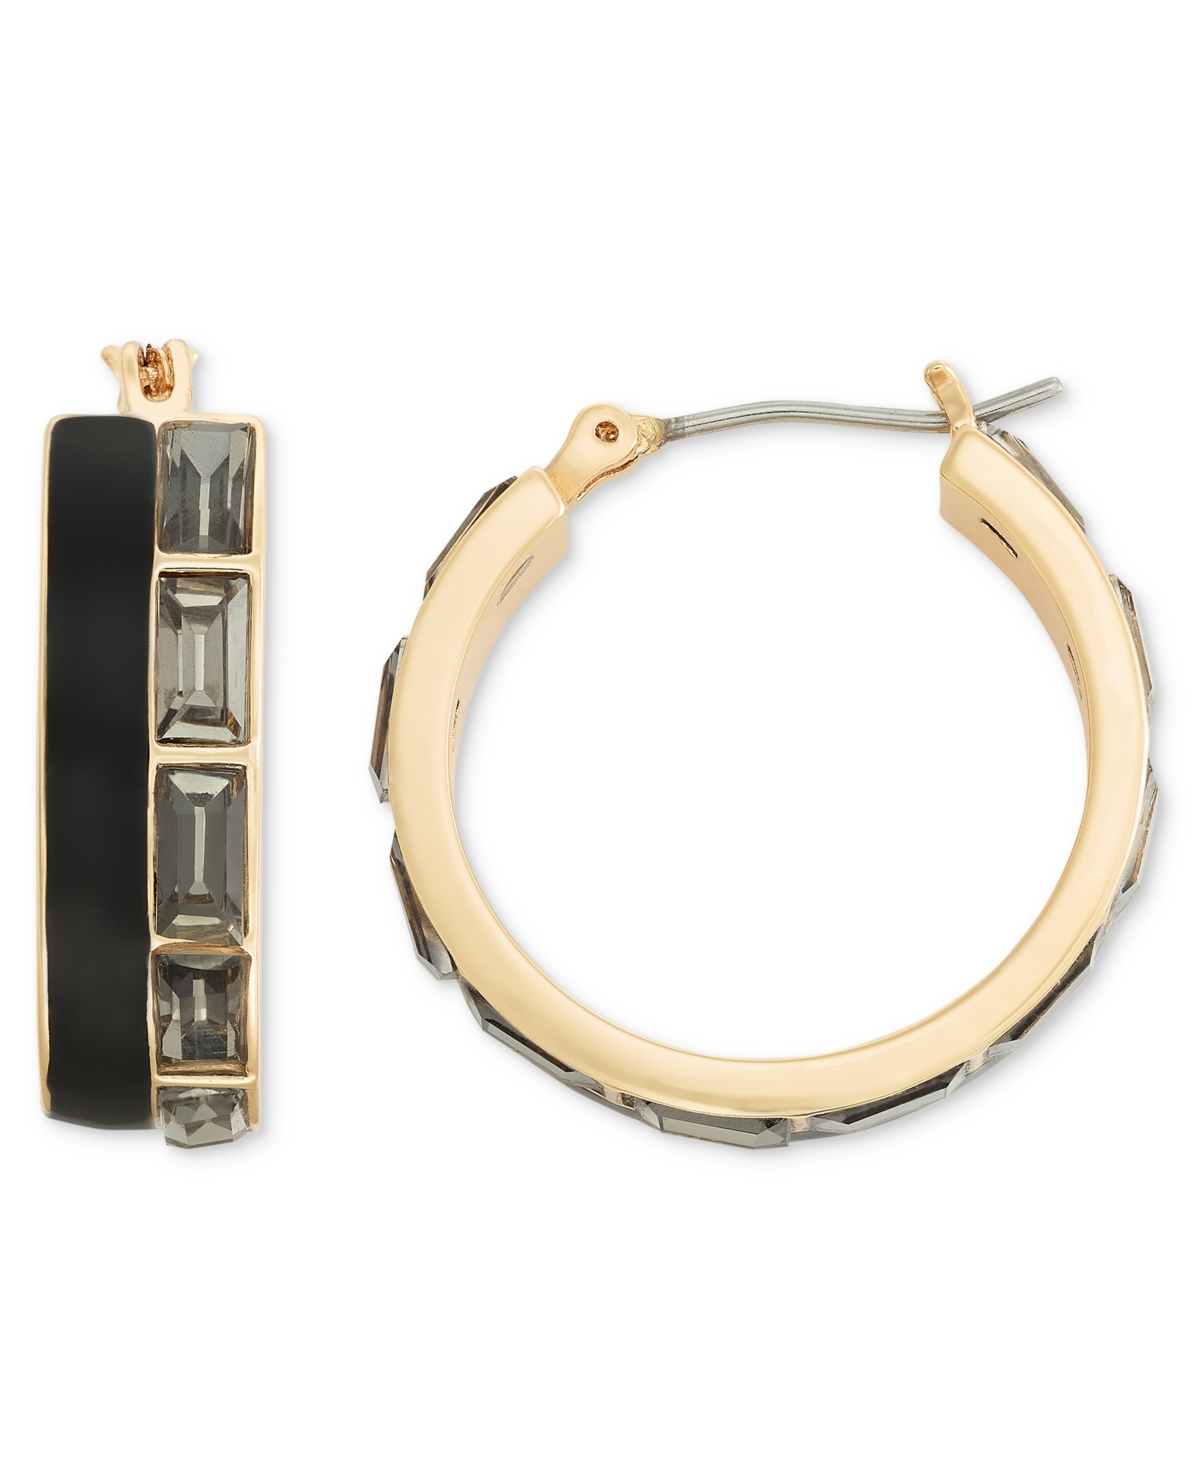 Gold-Tone Stone & Enamel Small Hoop Earrings, .85", Created for Macy's - Black